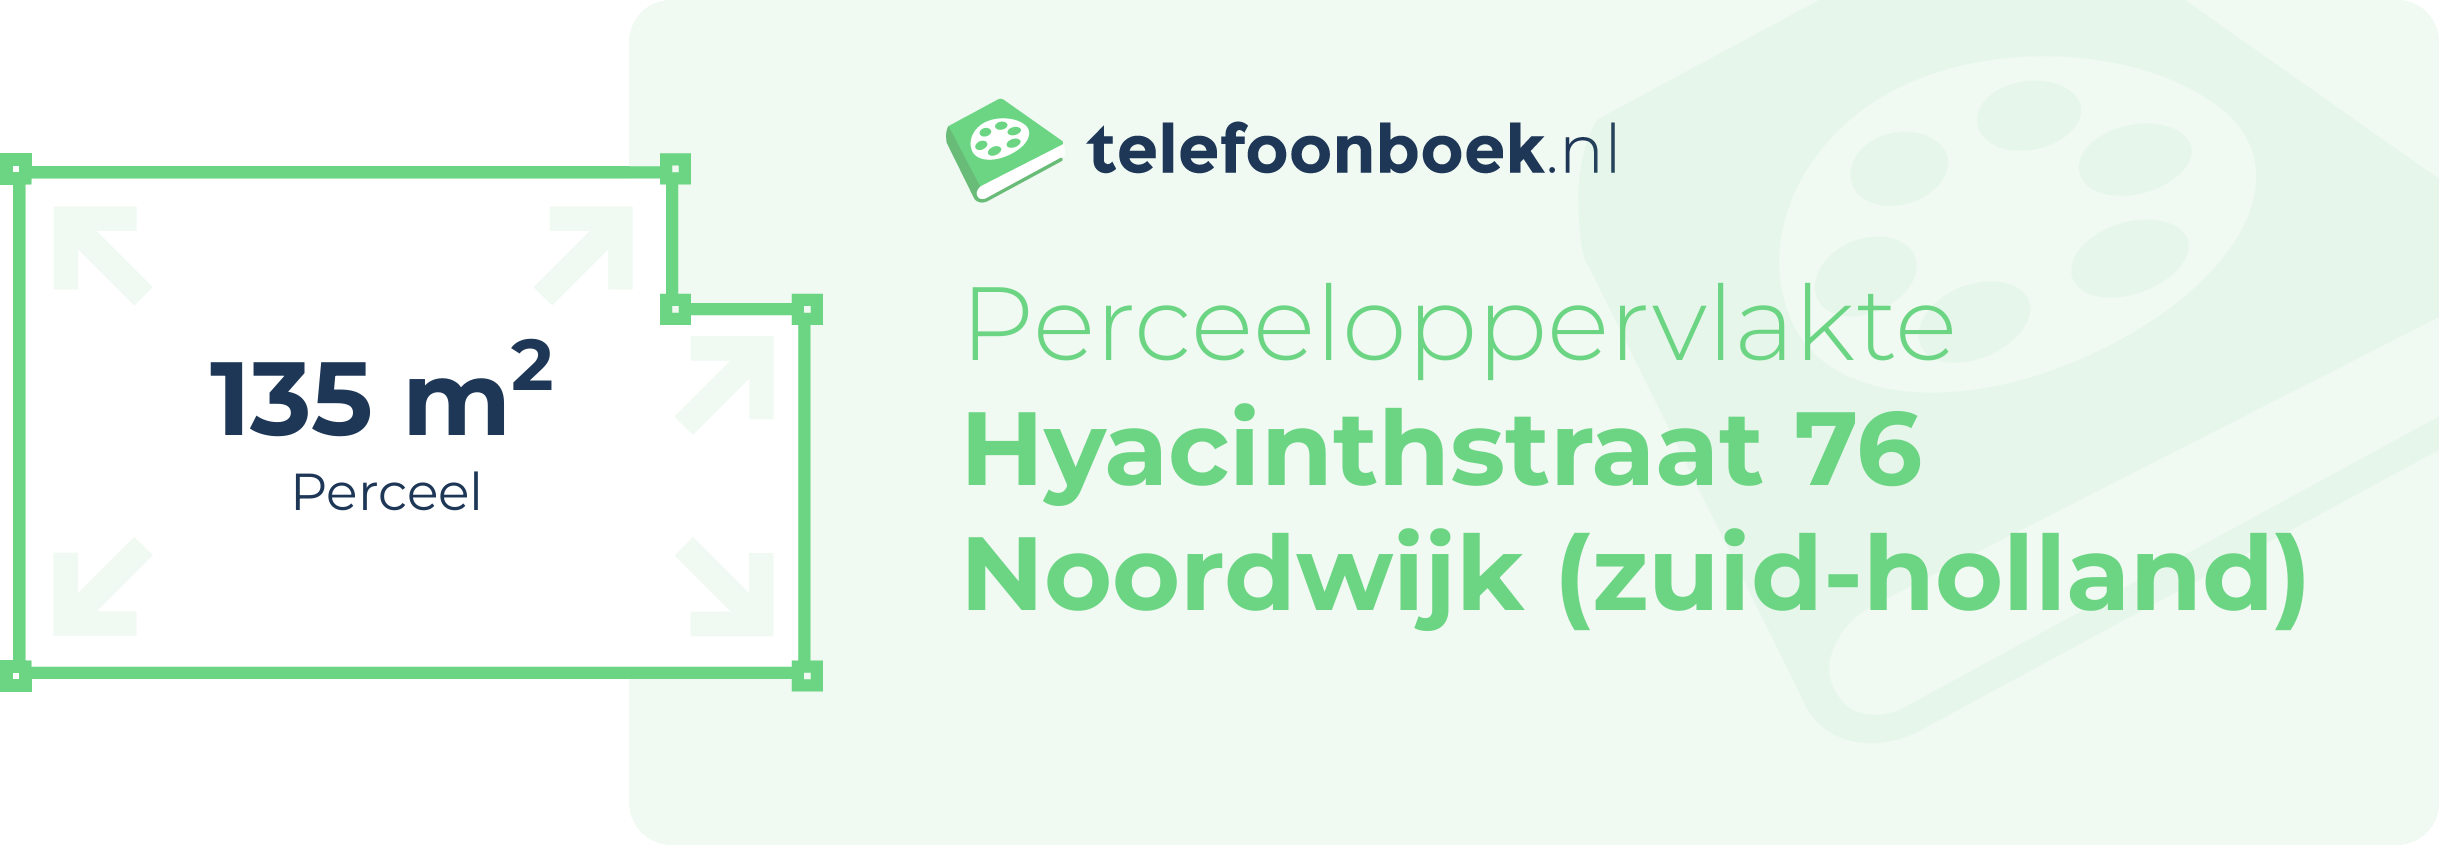 Perceeloppervlakte Hyacinthstraat 76 Noordwijk (Zuid-Holland)